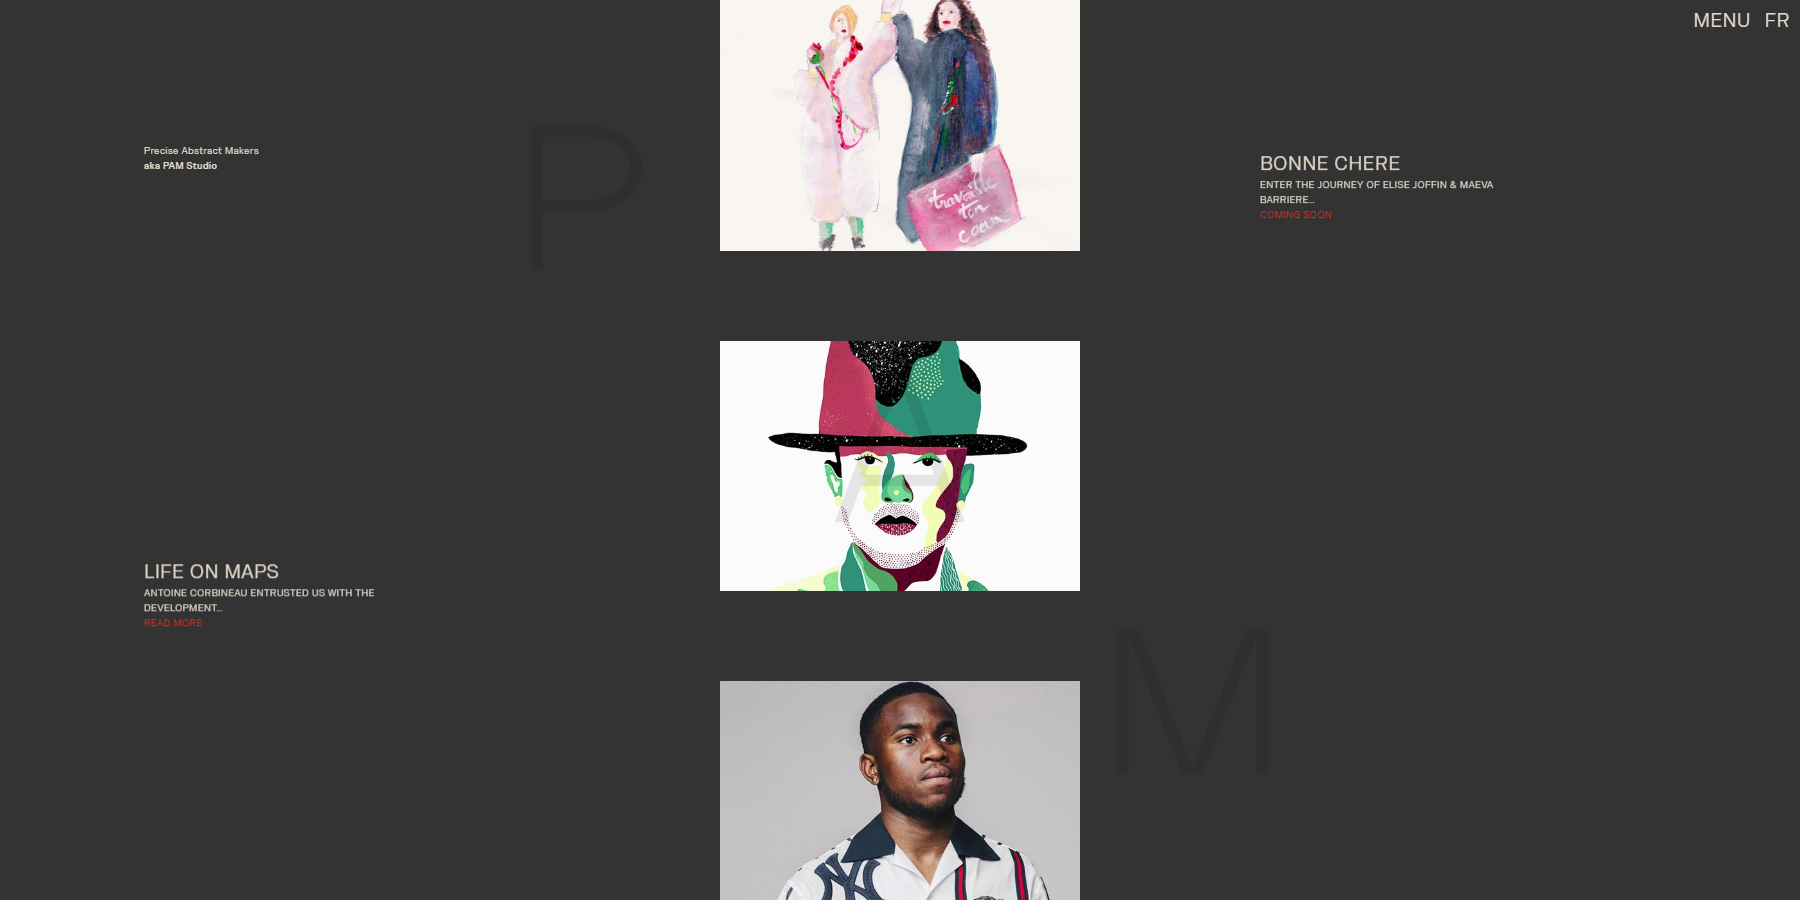 PAM Studio - Website of the Day